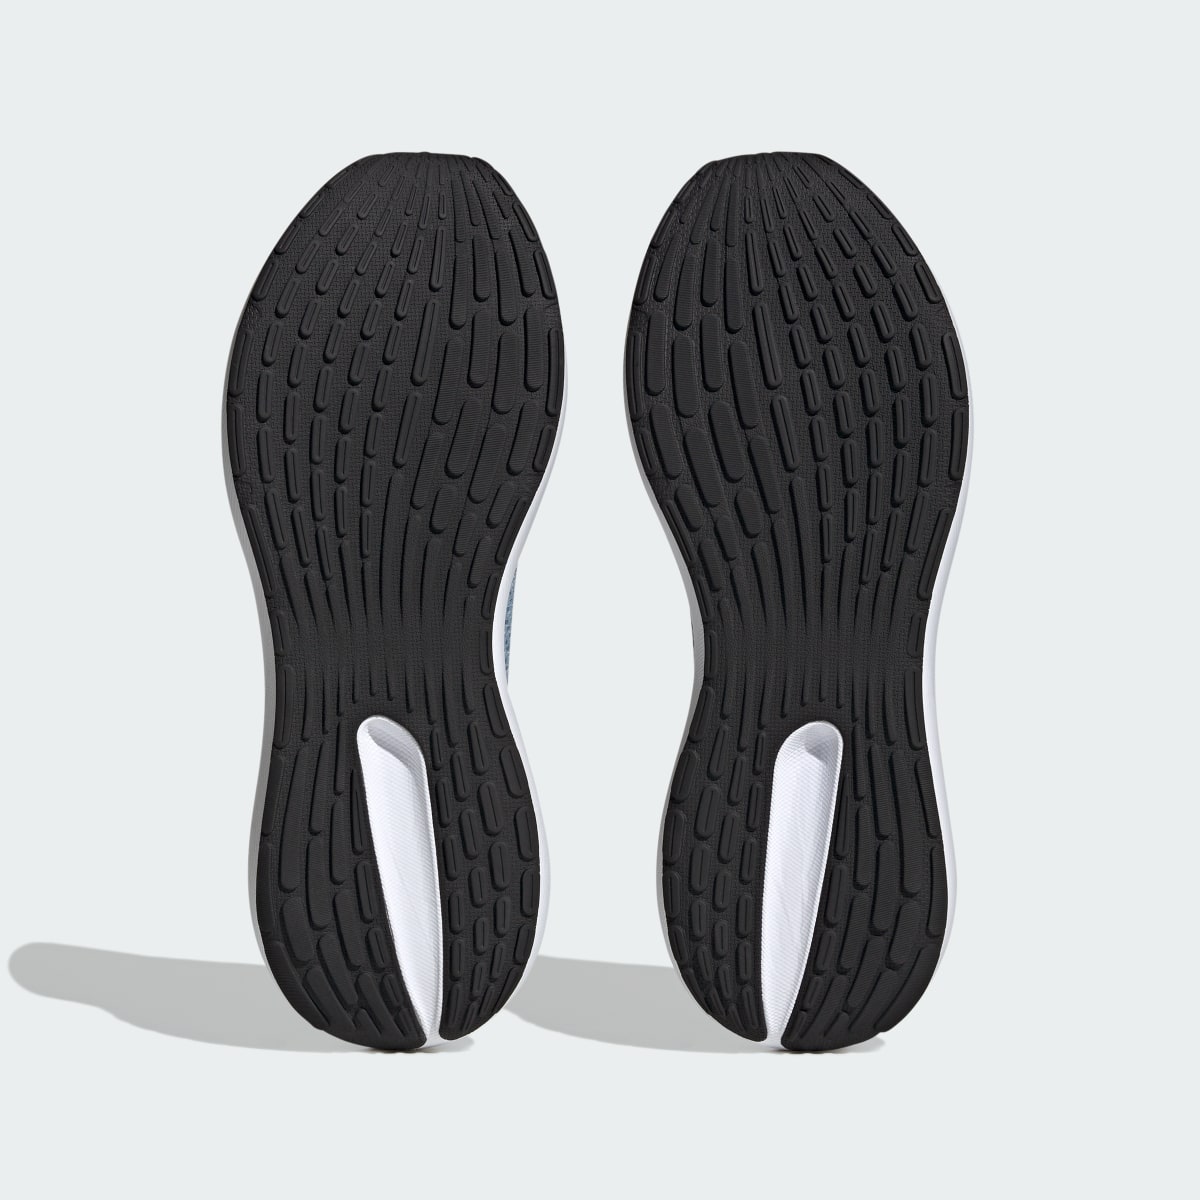 Adidas Response Runner Shoes. 4